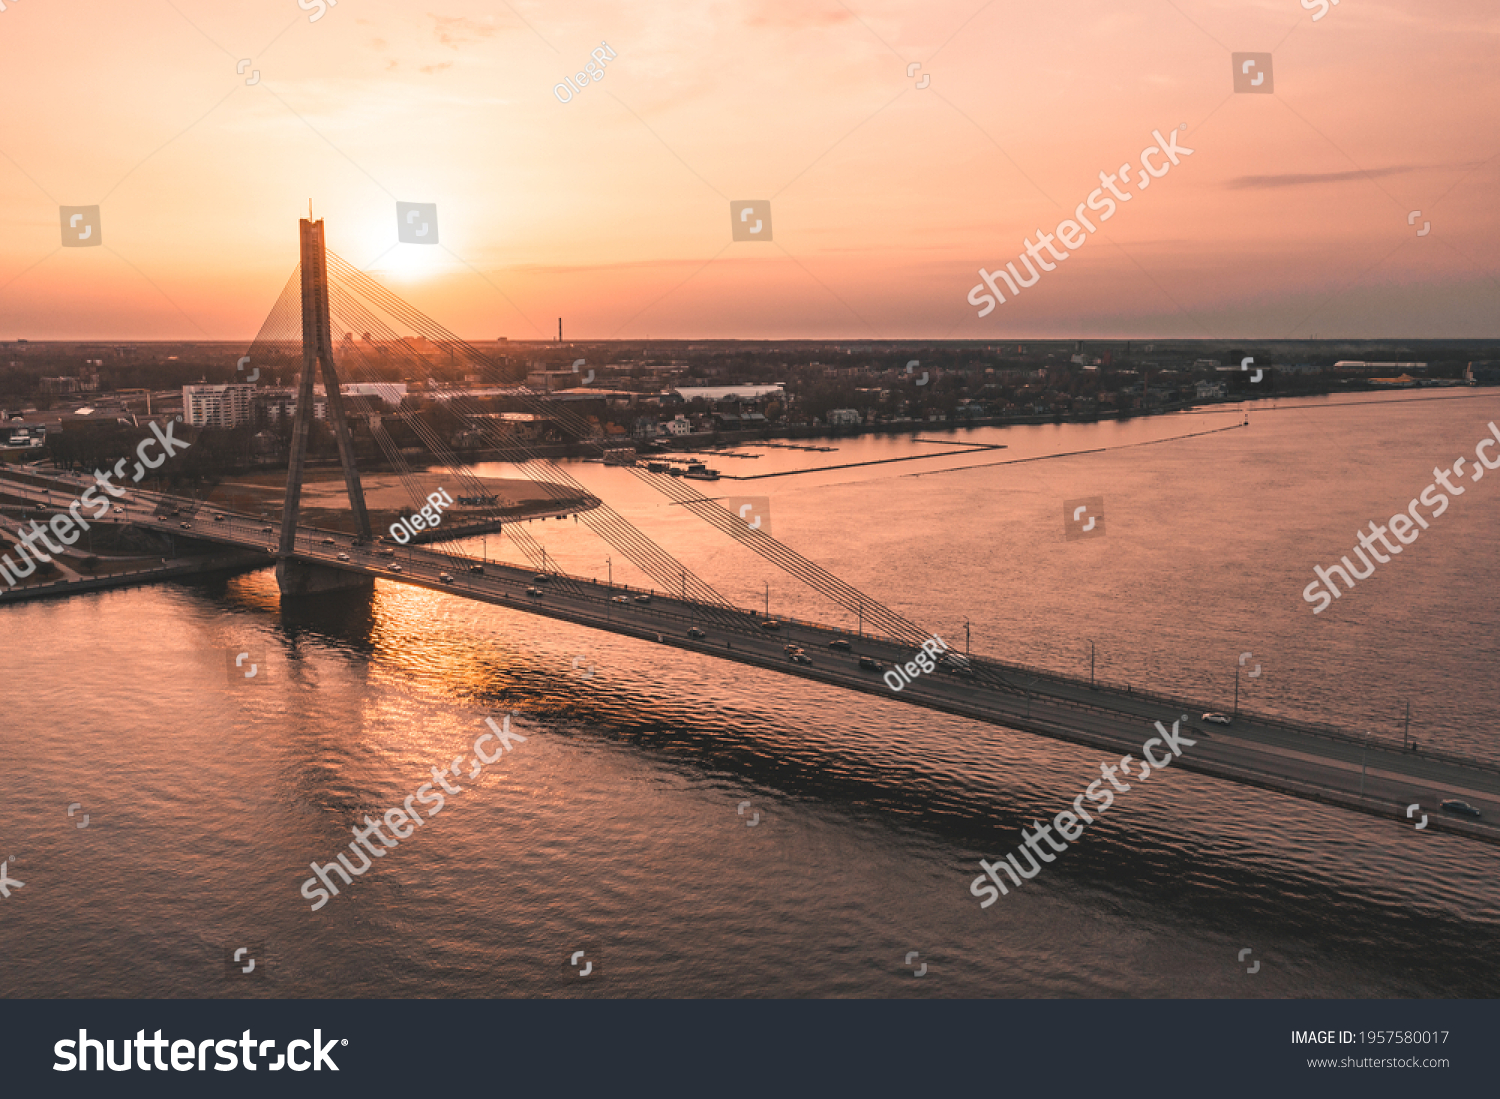 Bridge over river at sunset #1957580017